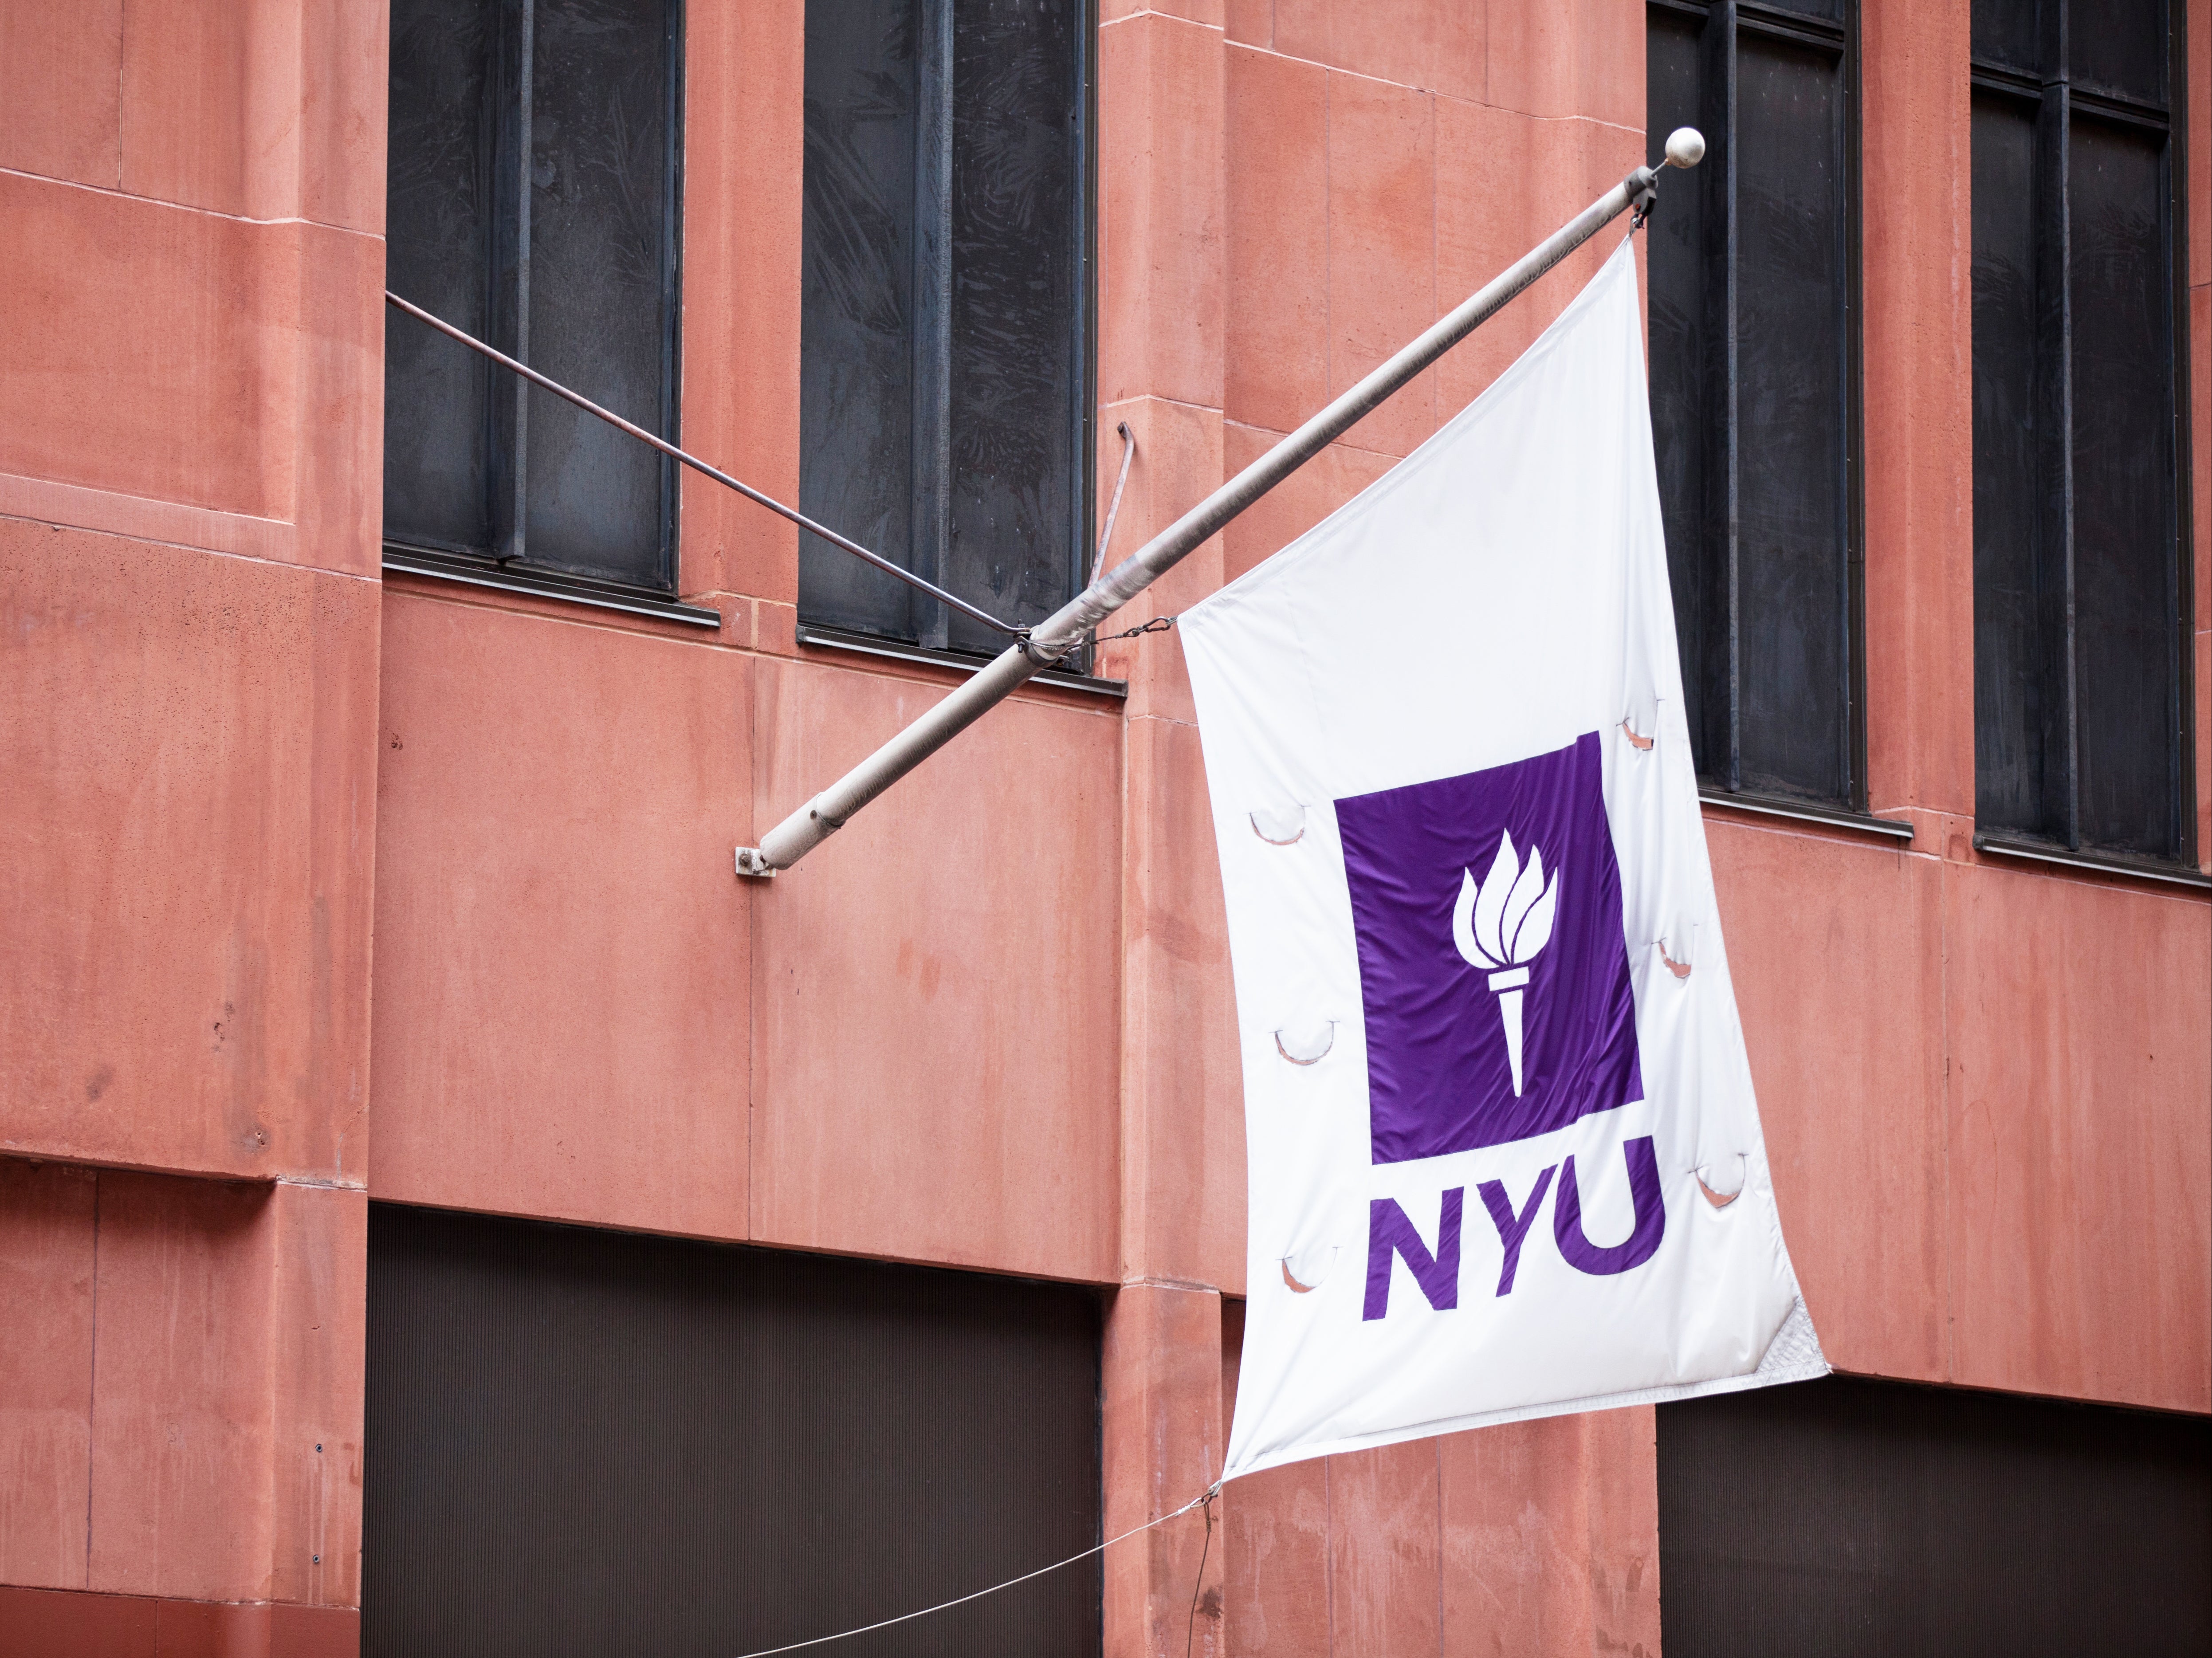 New York University in New York, New York